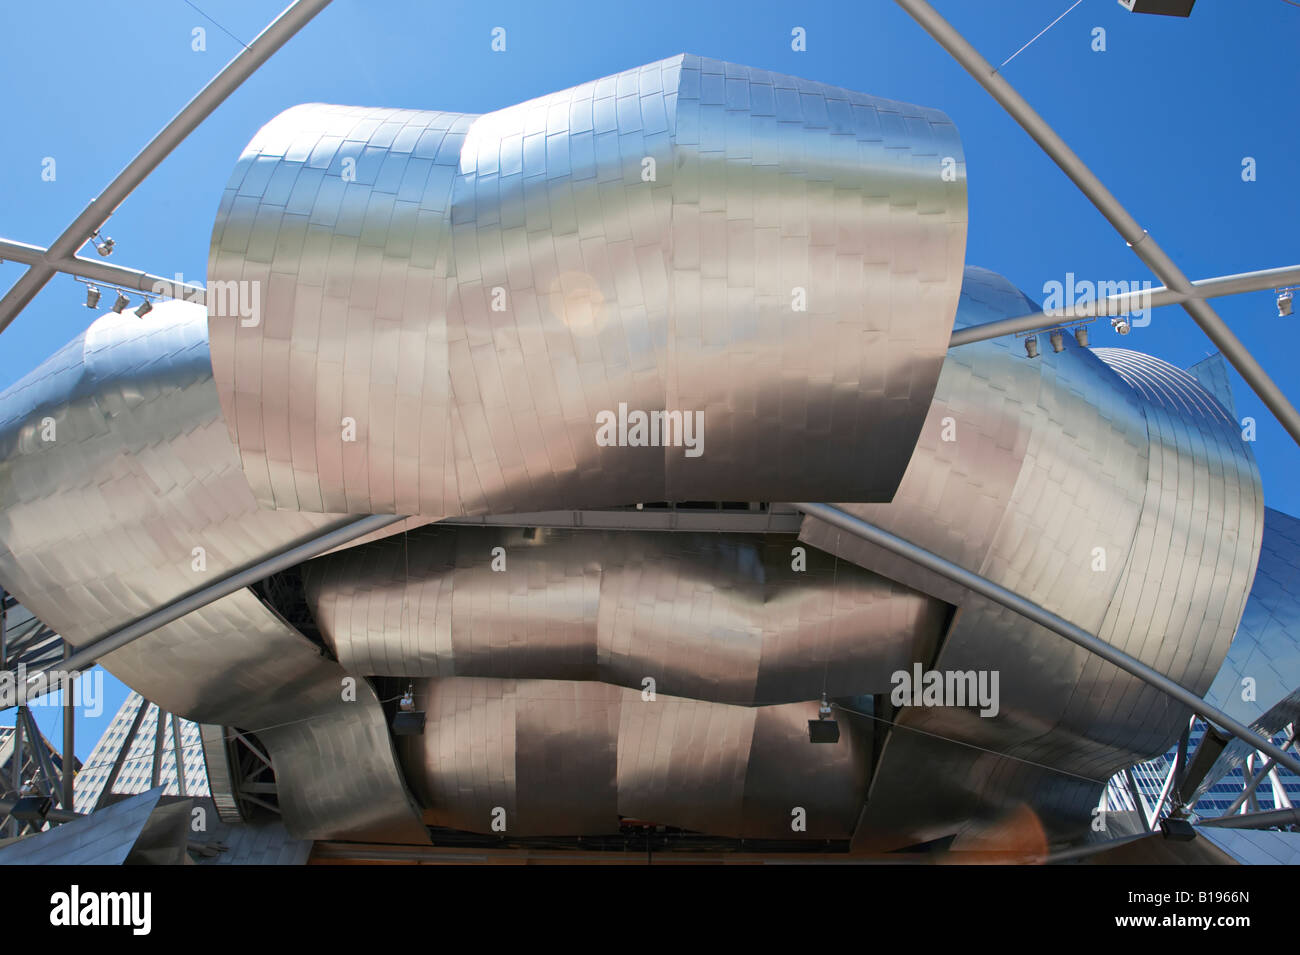 ILLINOIS Chicago Pritzker Pavilion modern architecture architect Frank Gehry curving steel panels Millennium Park Stock Photo